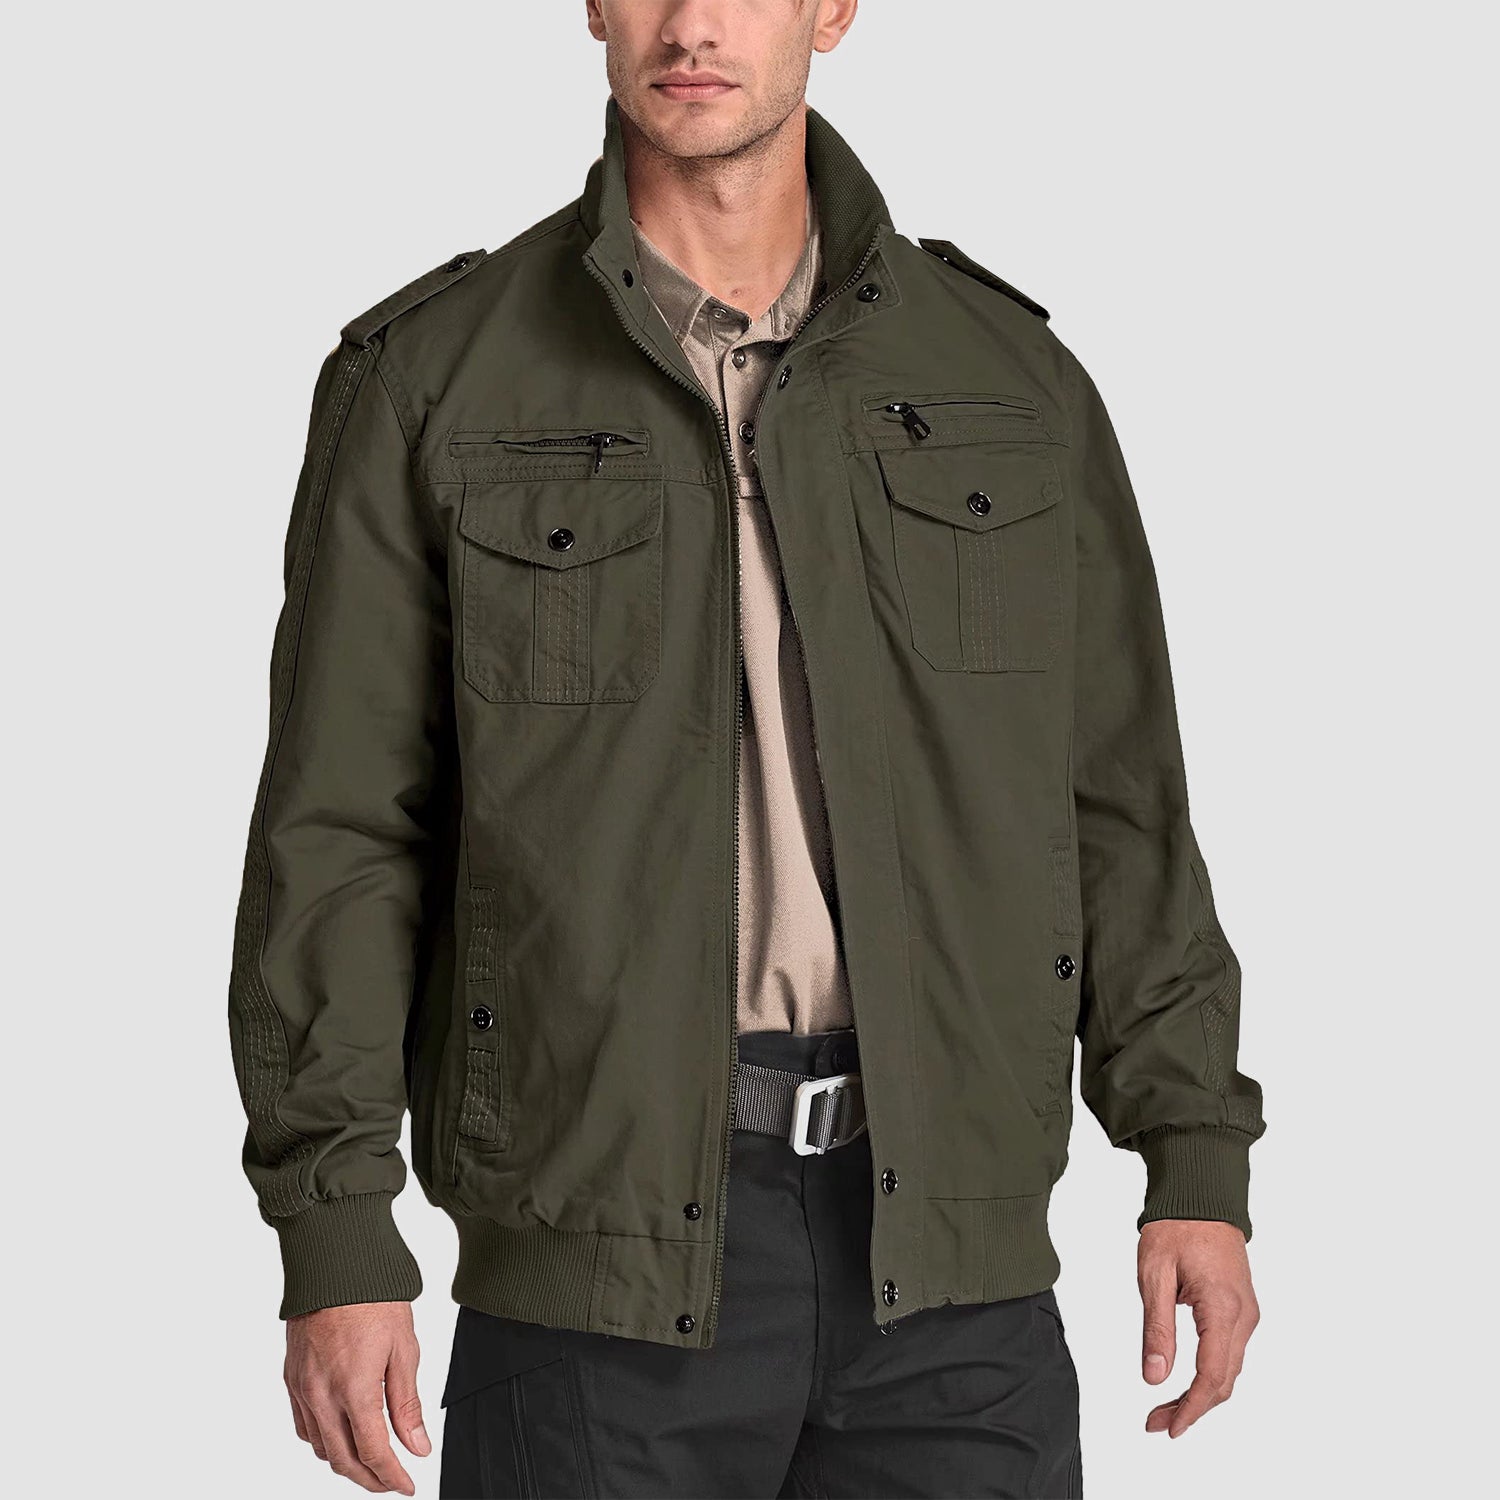 EKLENTSON Men's Casual Winter Cotton Military Jackets Outdoor Coats  Windbreaker Black at Amazon Men's Clothing store